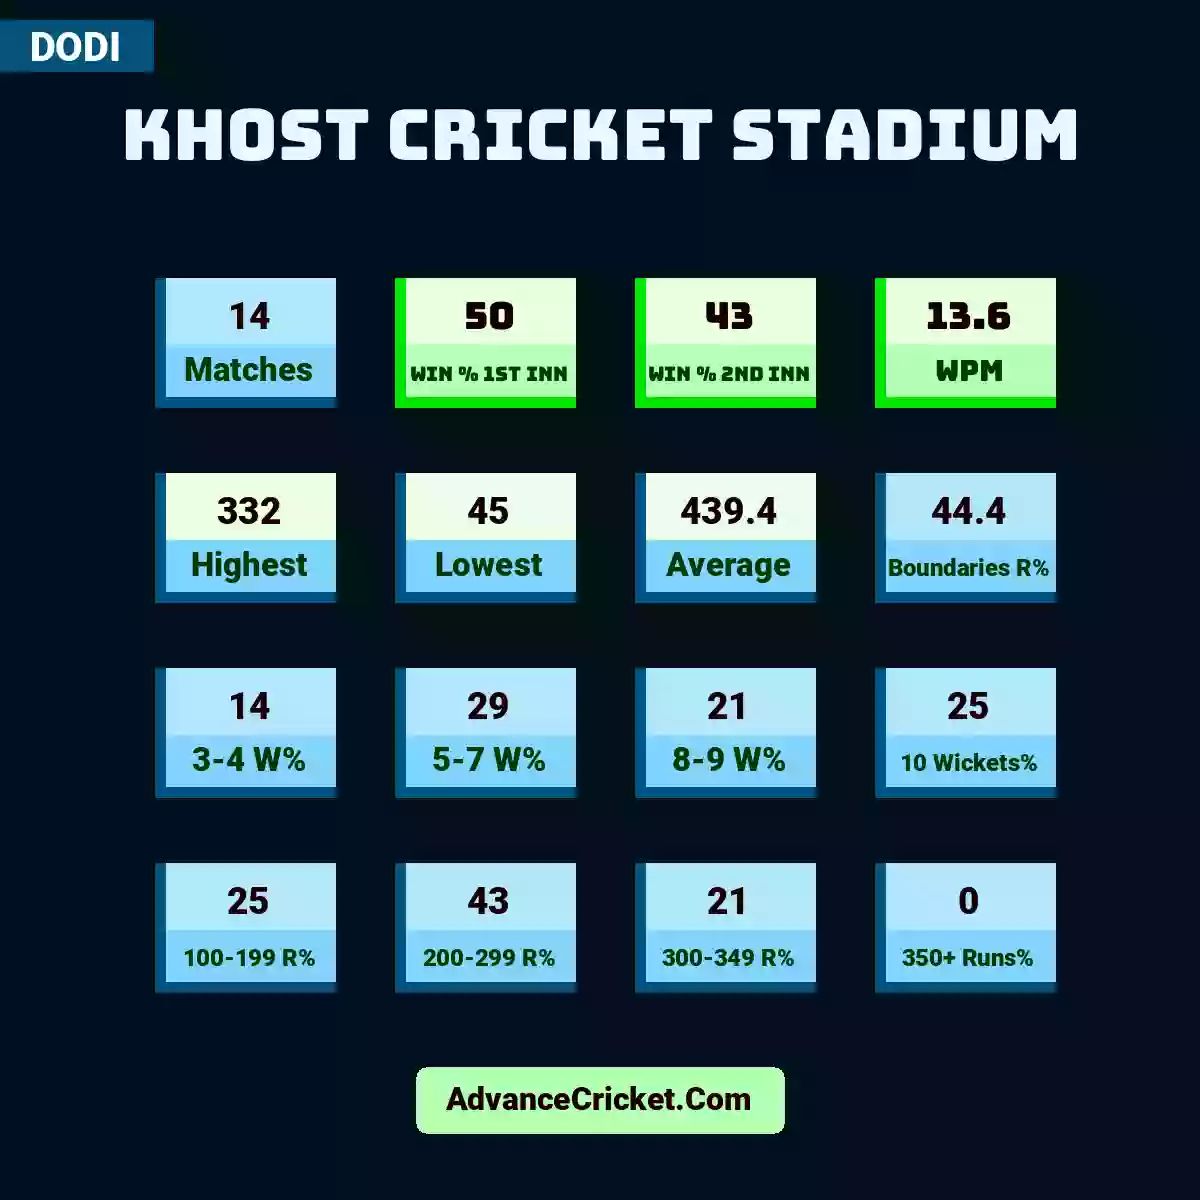 Image showing Khost Cricket Stadium with Matches: 14, Win % 1st Inn: 50, Win % 2nd Inn: 43, WPM: 13.6, Highest: 332, Lowest: 45, Average: 439.4, Boundaries R%: 44.4, 3-4 W%: 14, 5-7 W%: 29, 8-9 W%: 21, 10 Wickets%: 25, 100-199 R%: 25, 200-299 R%: 43, 300-349 R%: 21, 350+ Runs%: 0.